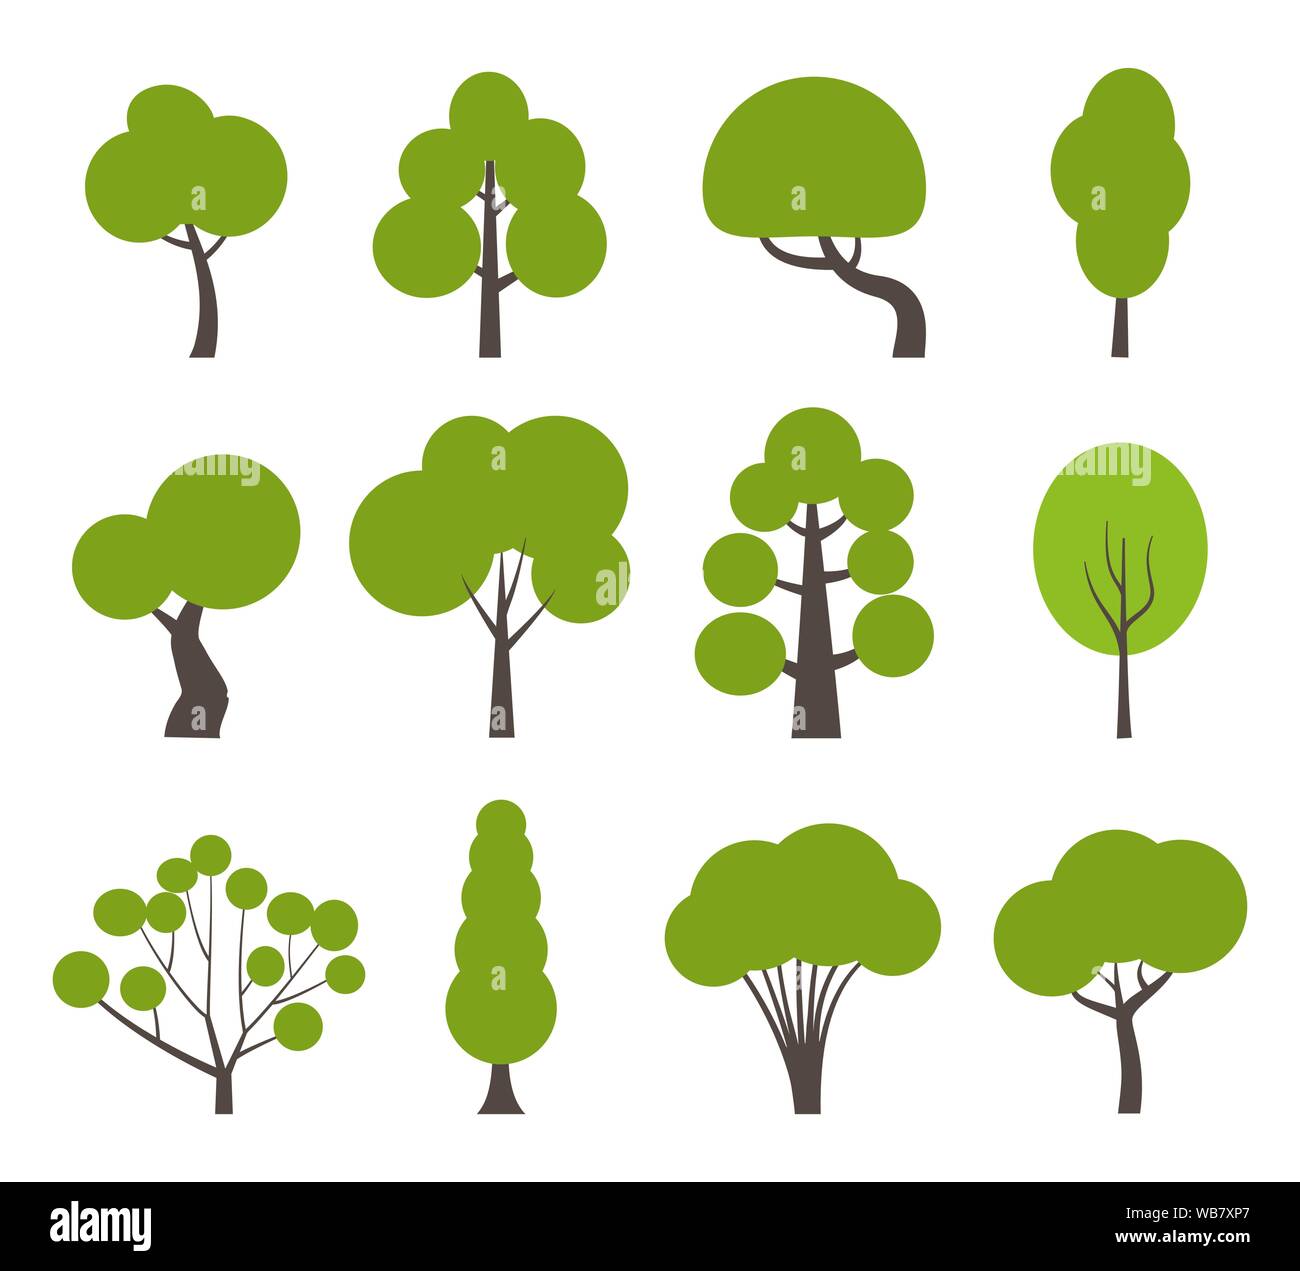 Big set of various trees. Tree icons set in a modern flat style. Pine, spruce, oak, birch, trunk, aspen, alder, poplar, chestnut, palm apple tree Vect Stock Vector